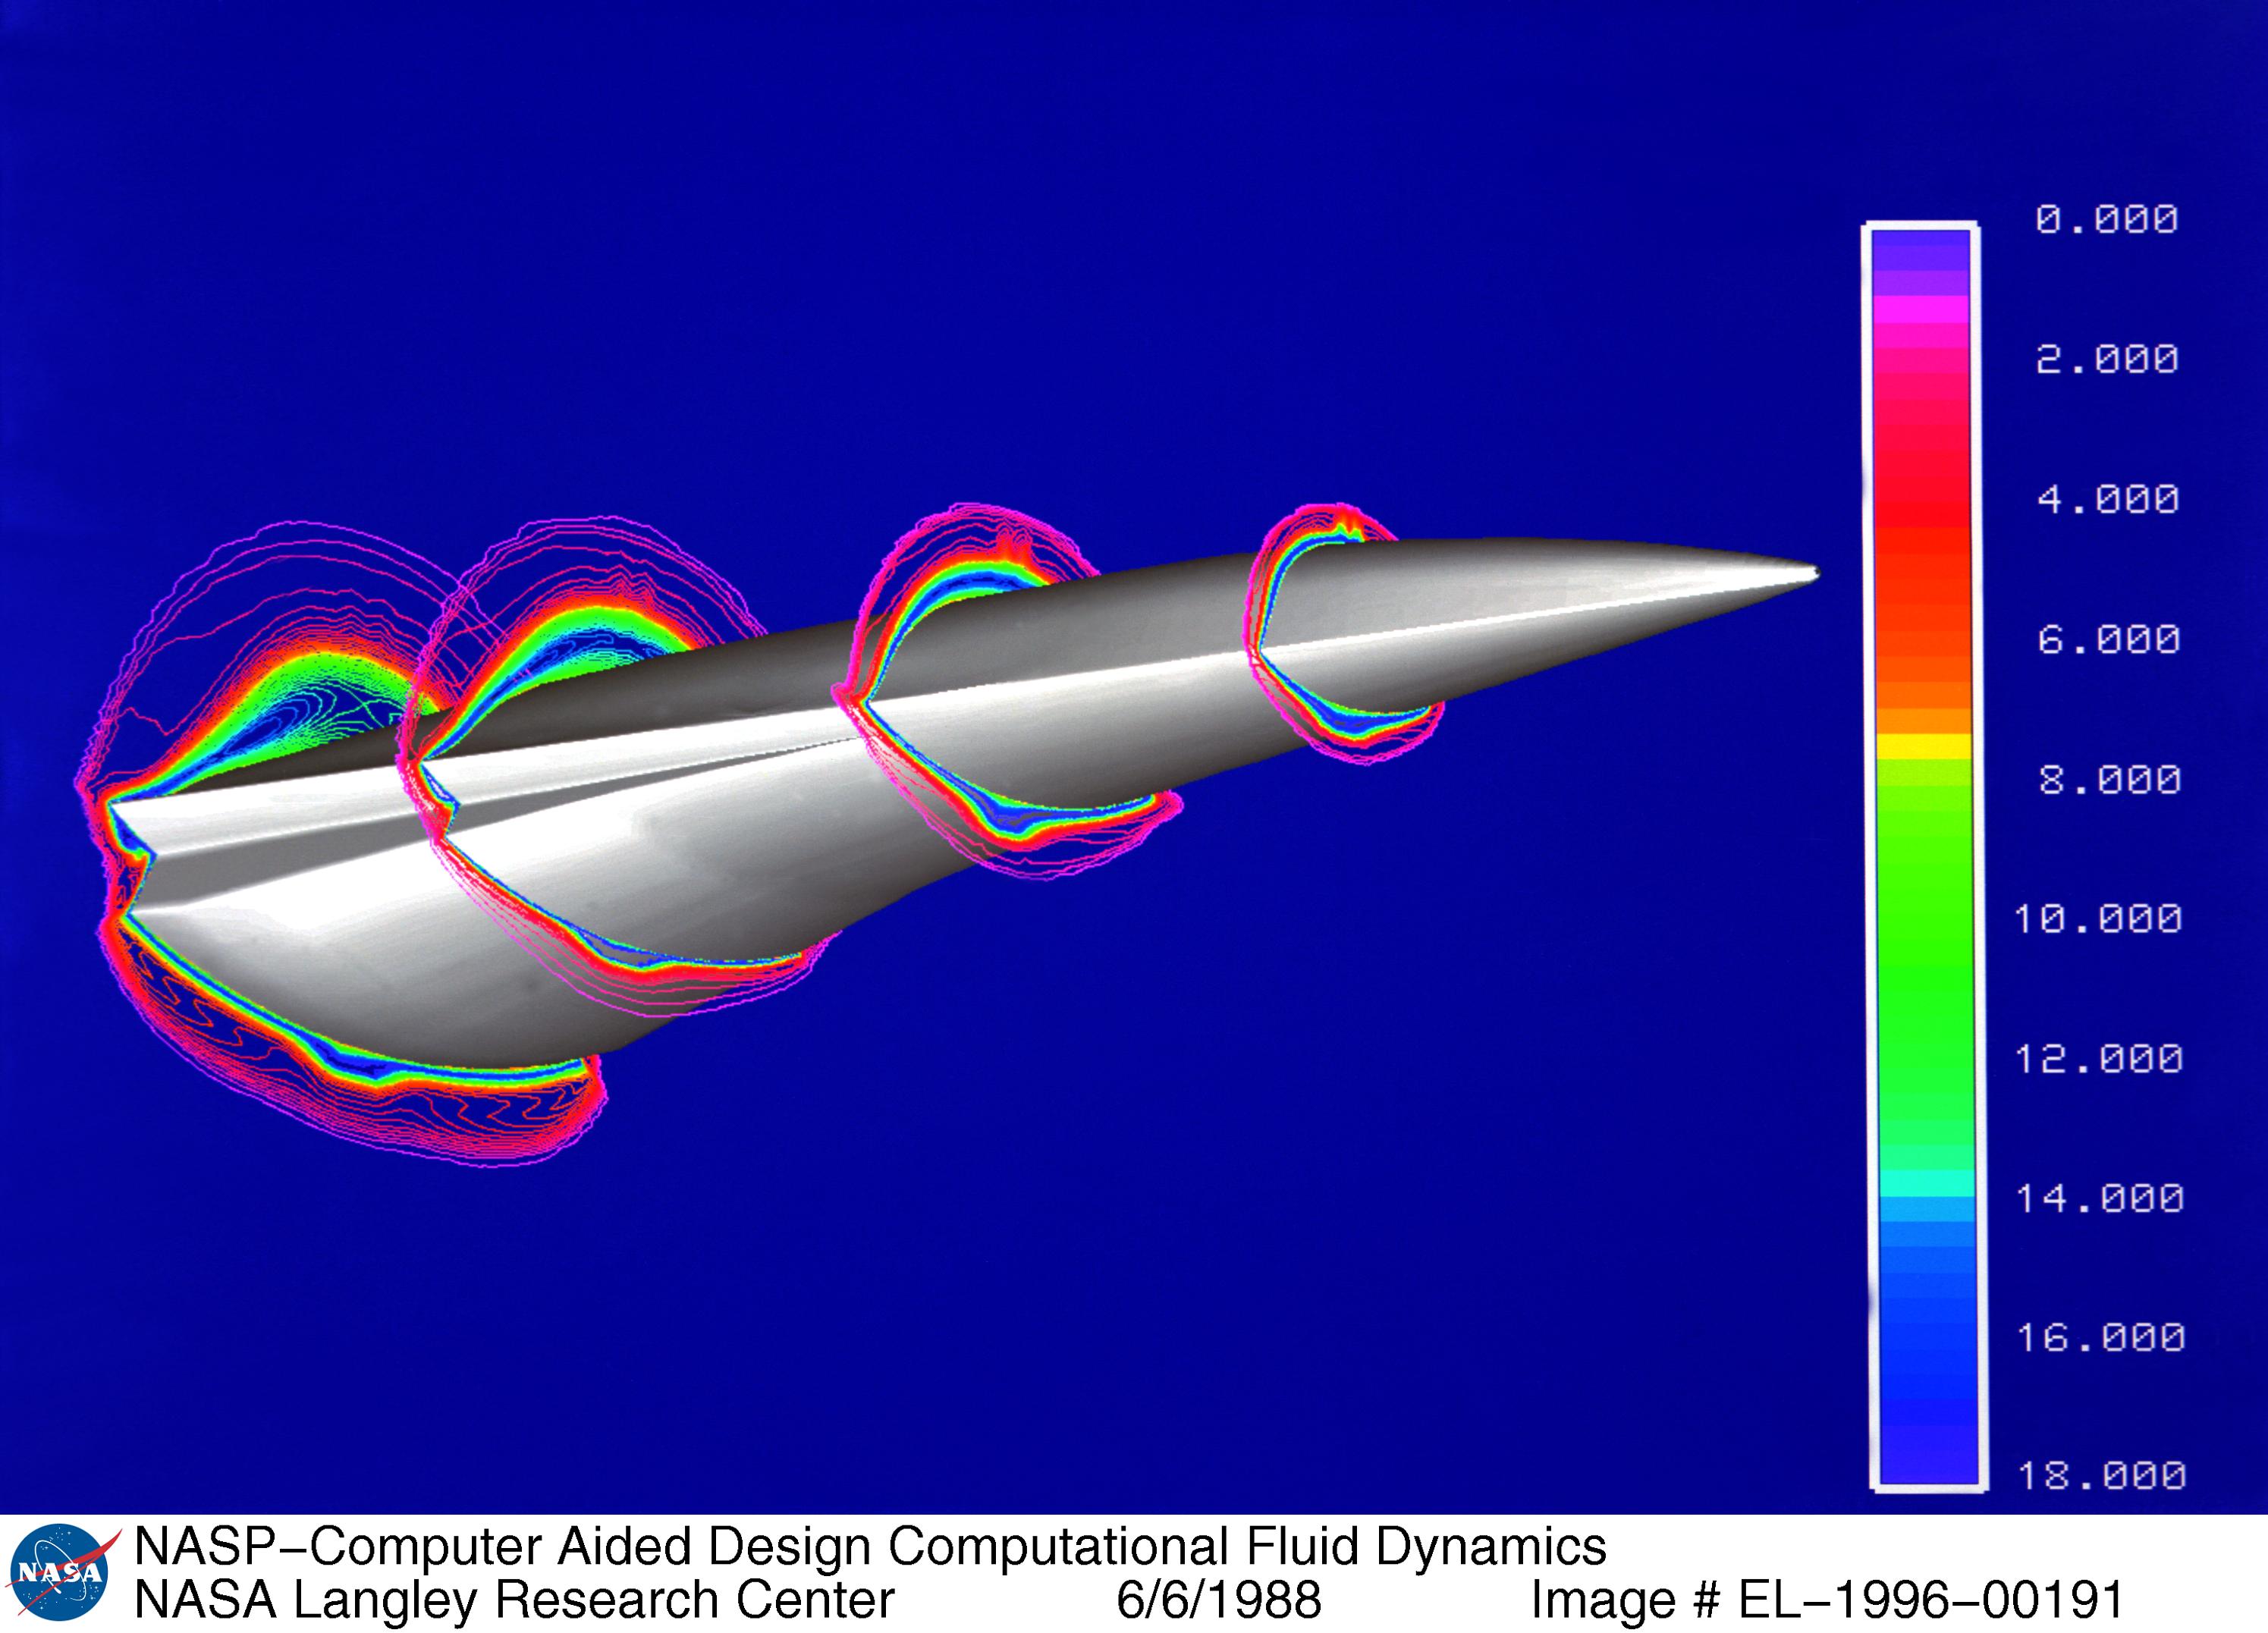 File:X-30 NASP-Computer Aided Design Computational Fluid Dynamics.jpeg